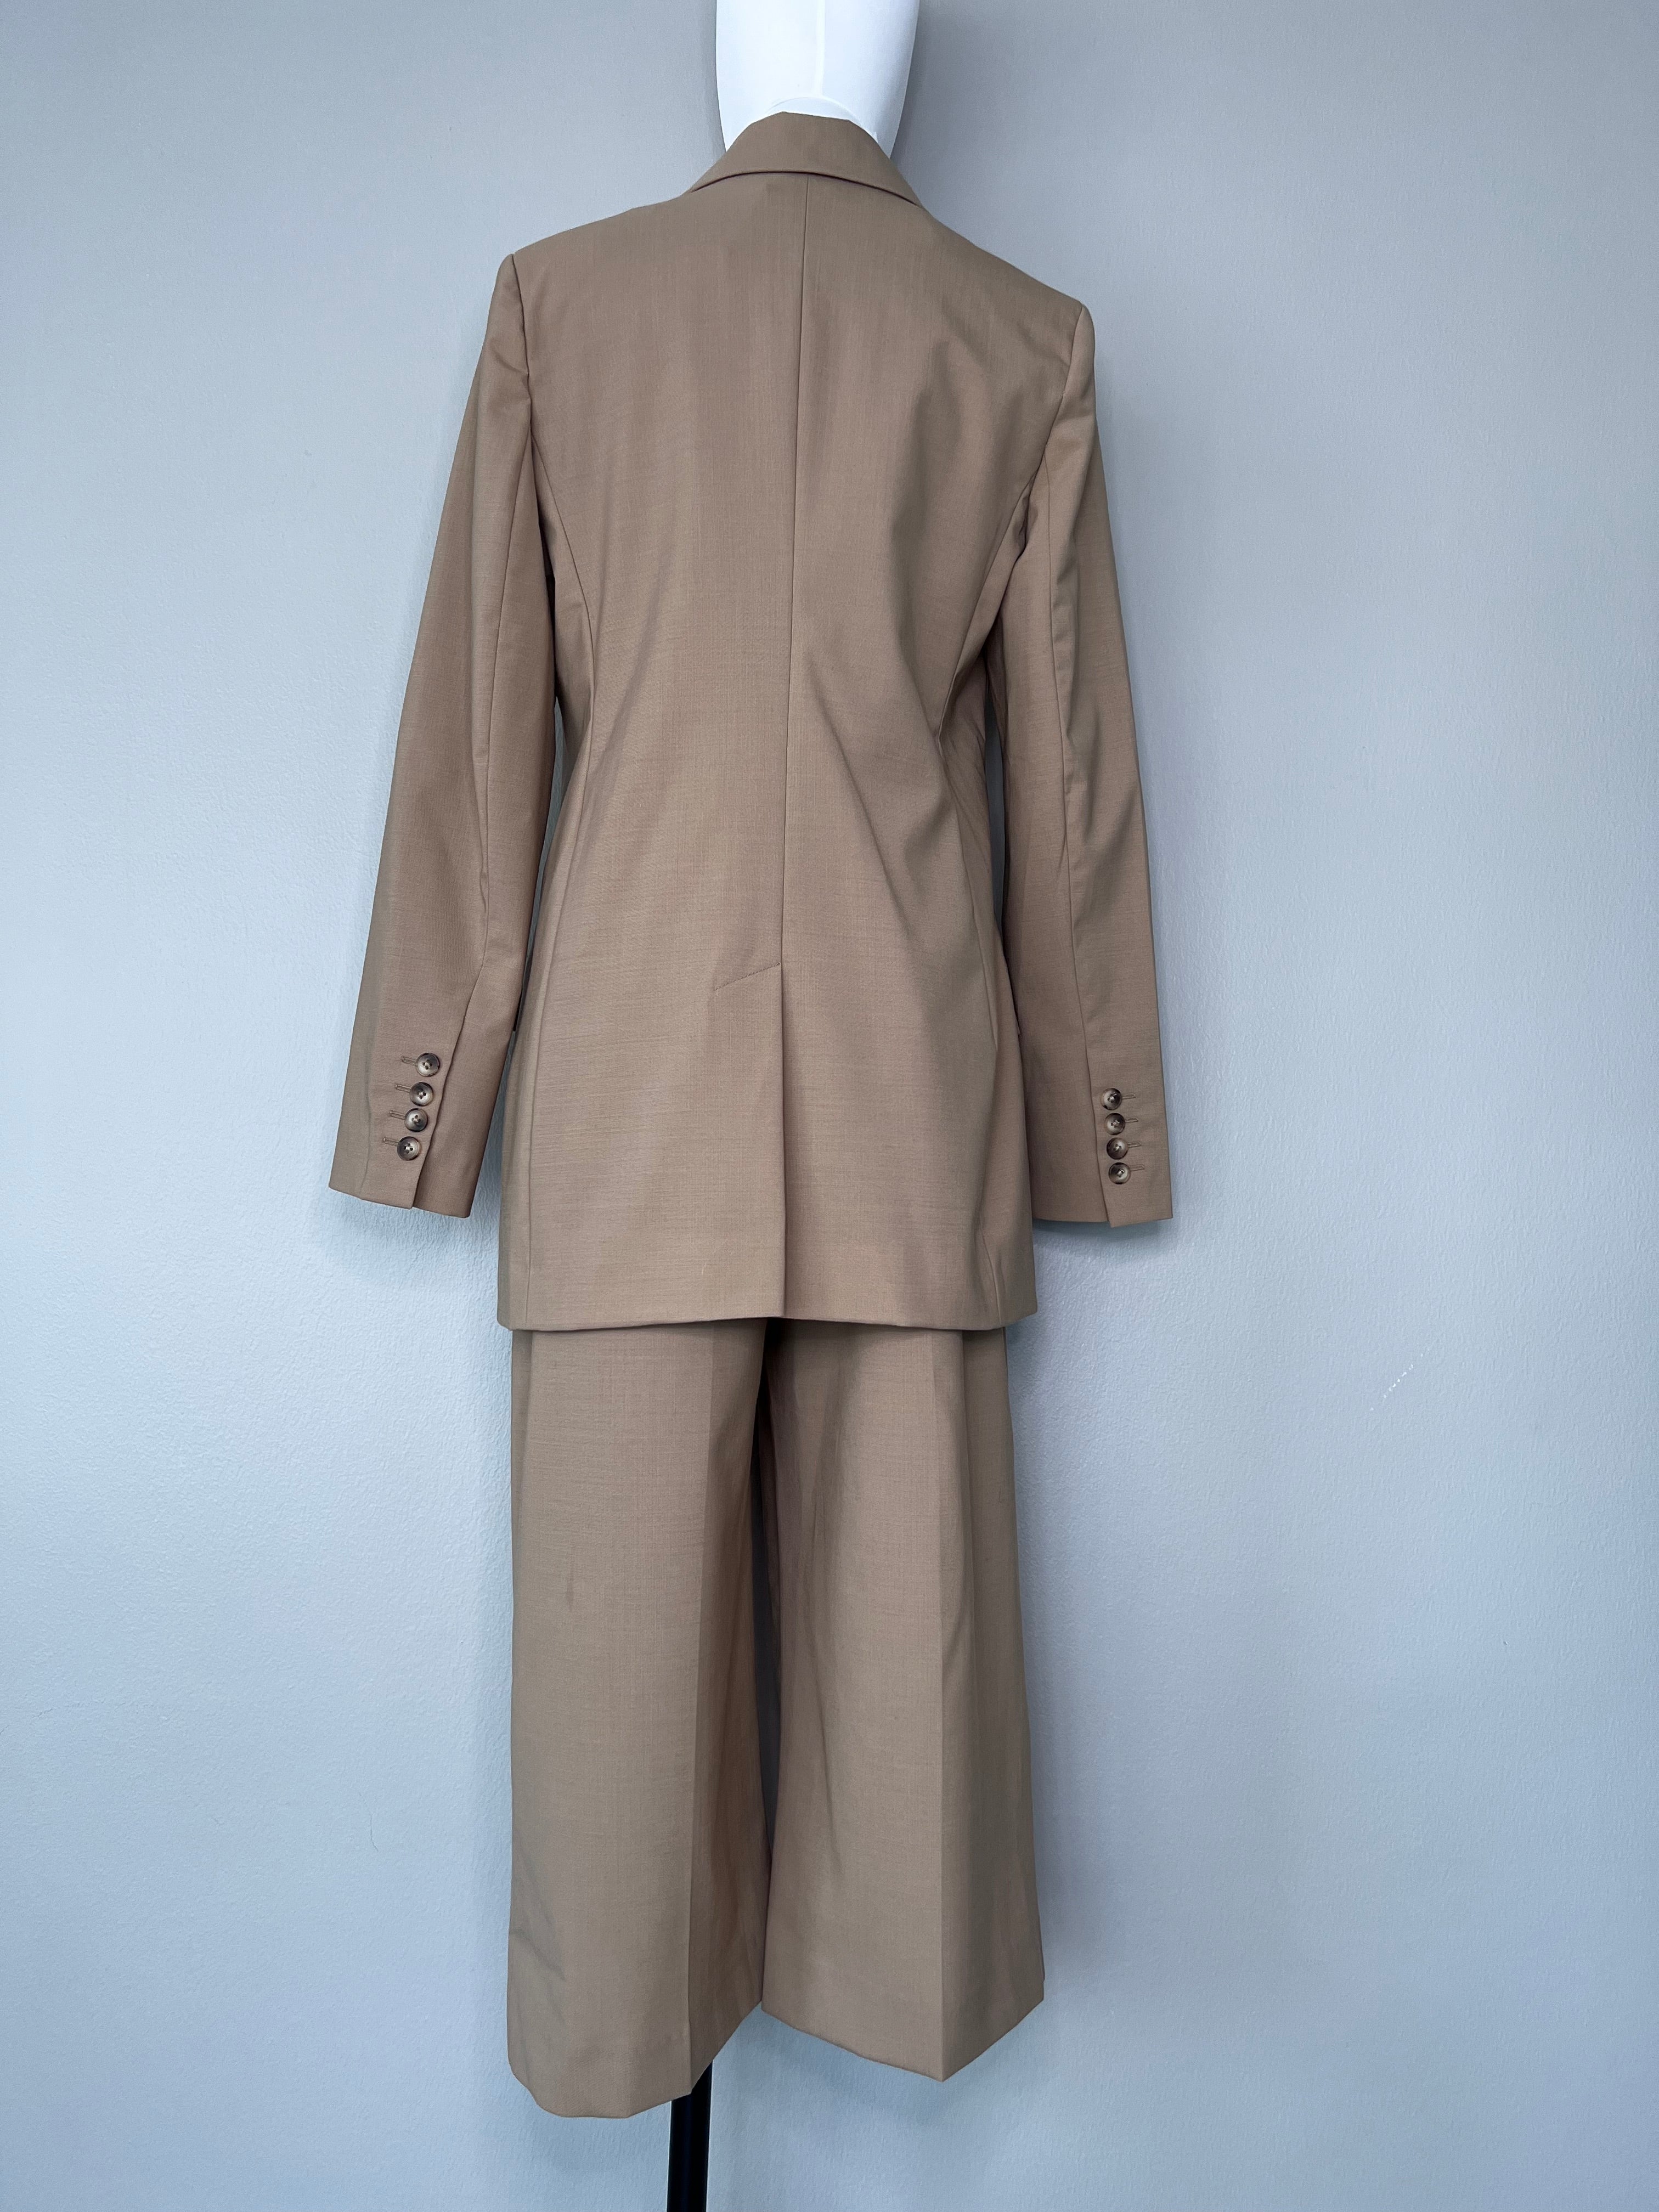 Brand new camel coloured oversized camel suit - IRIS & INK